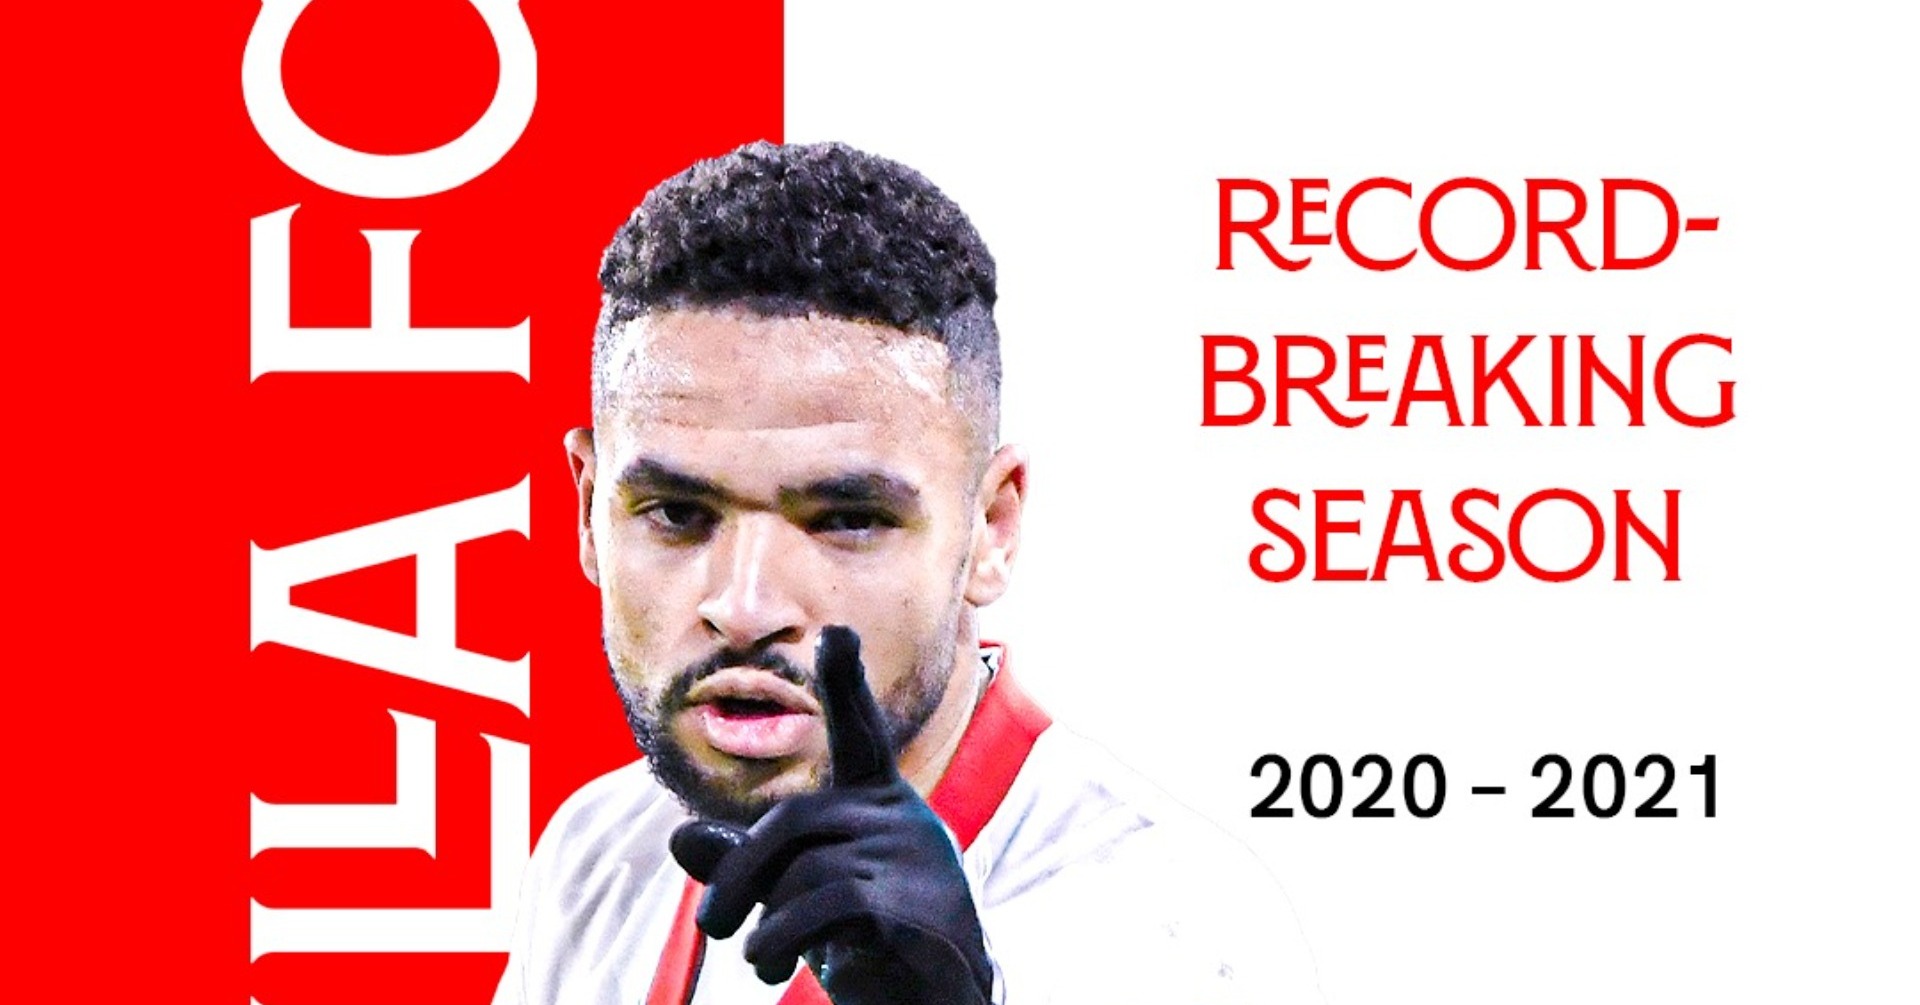 A record-breaking season